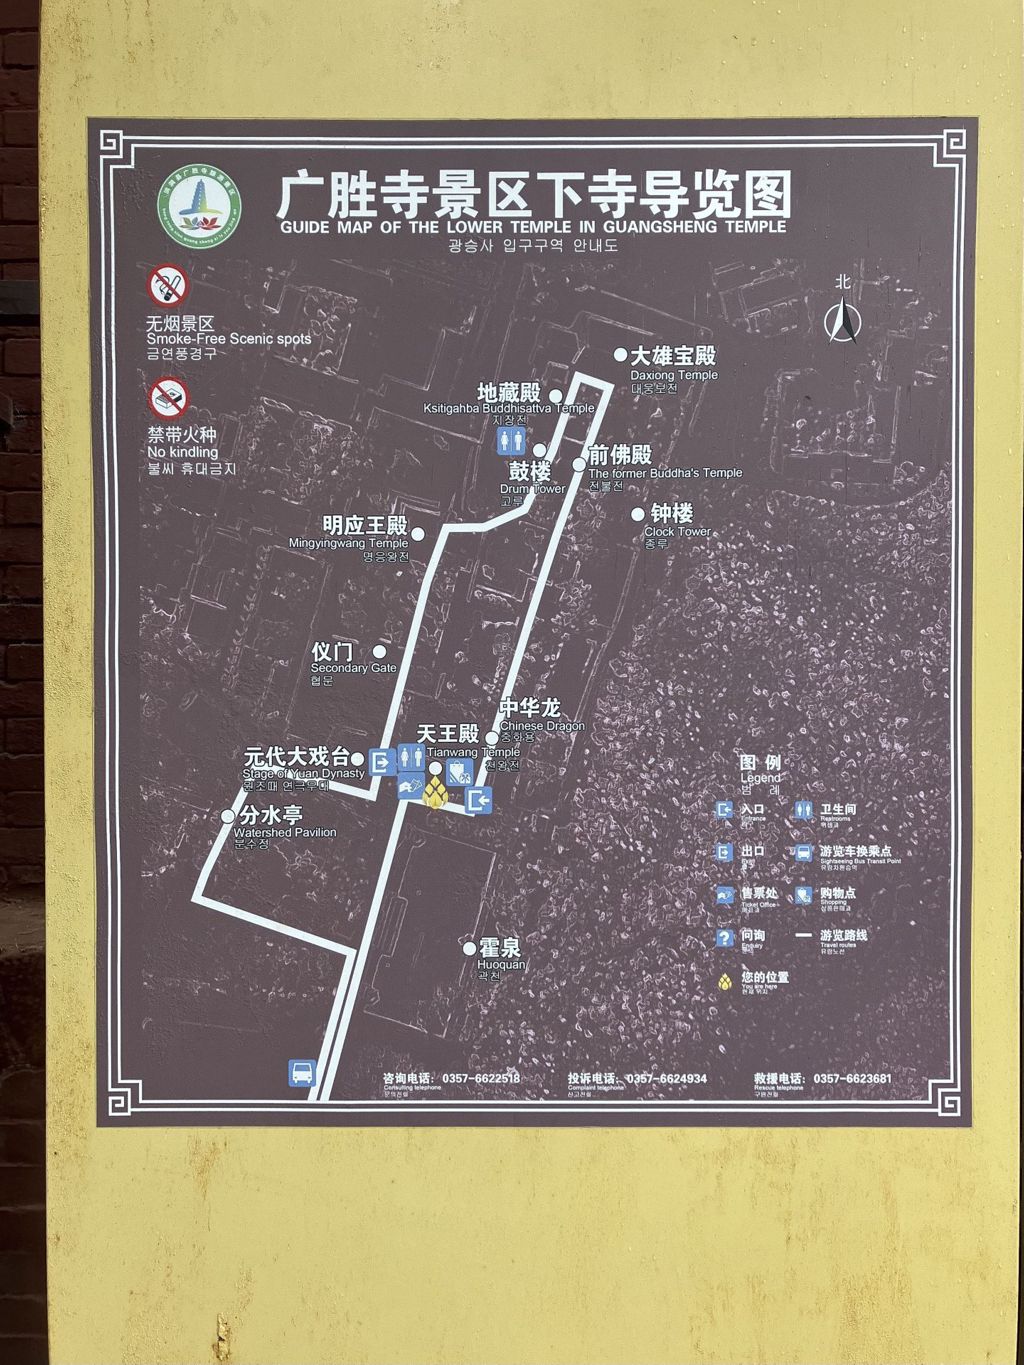 Miniature of Lower Guangsheng Temple, guide map